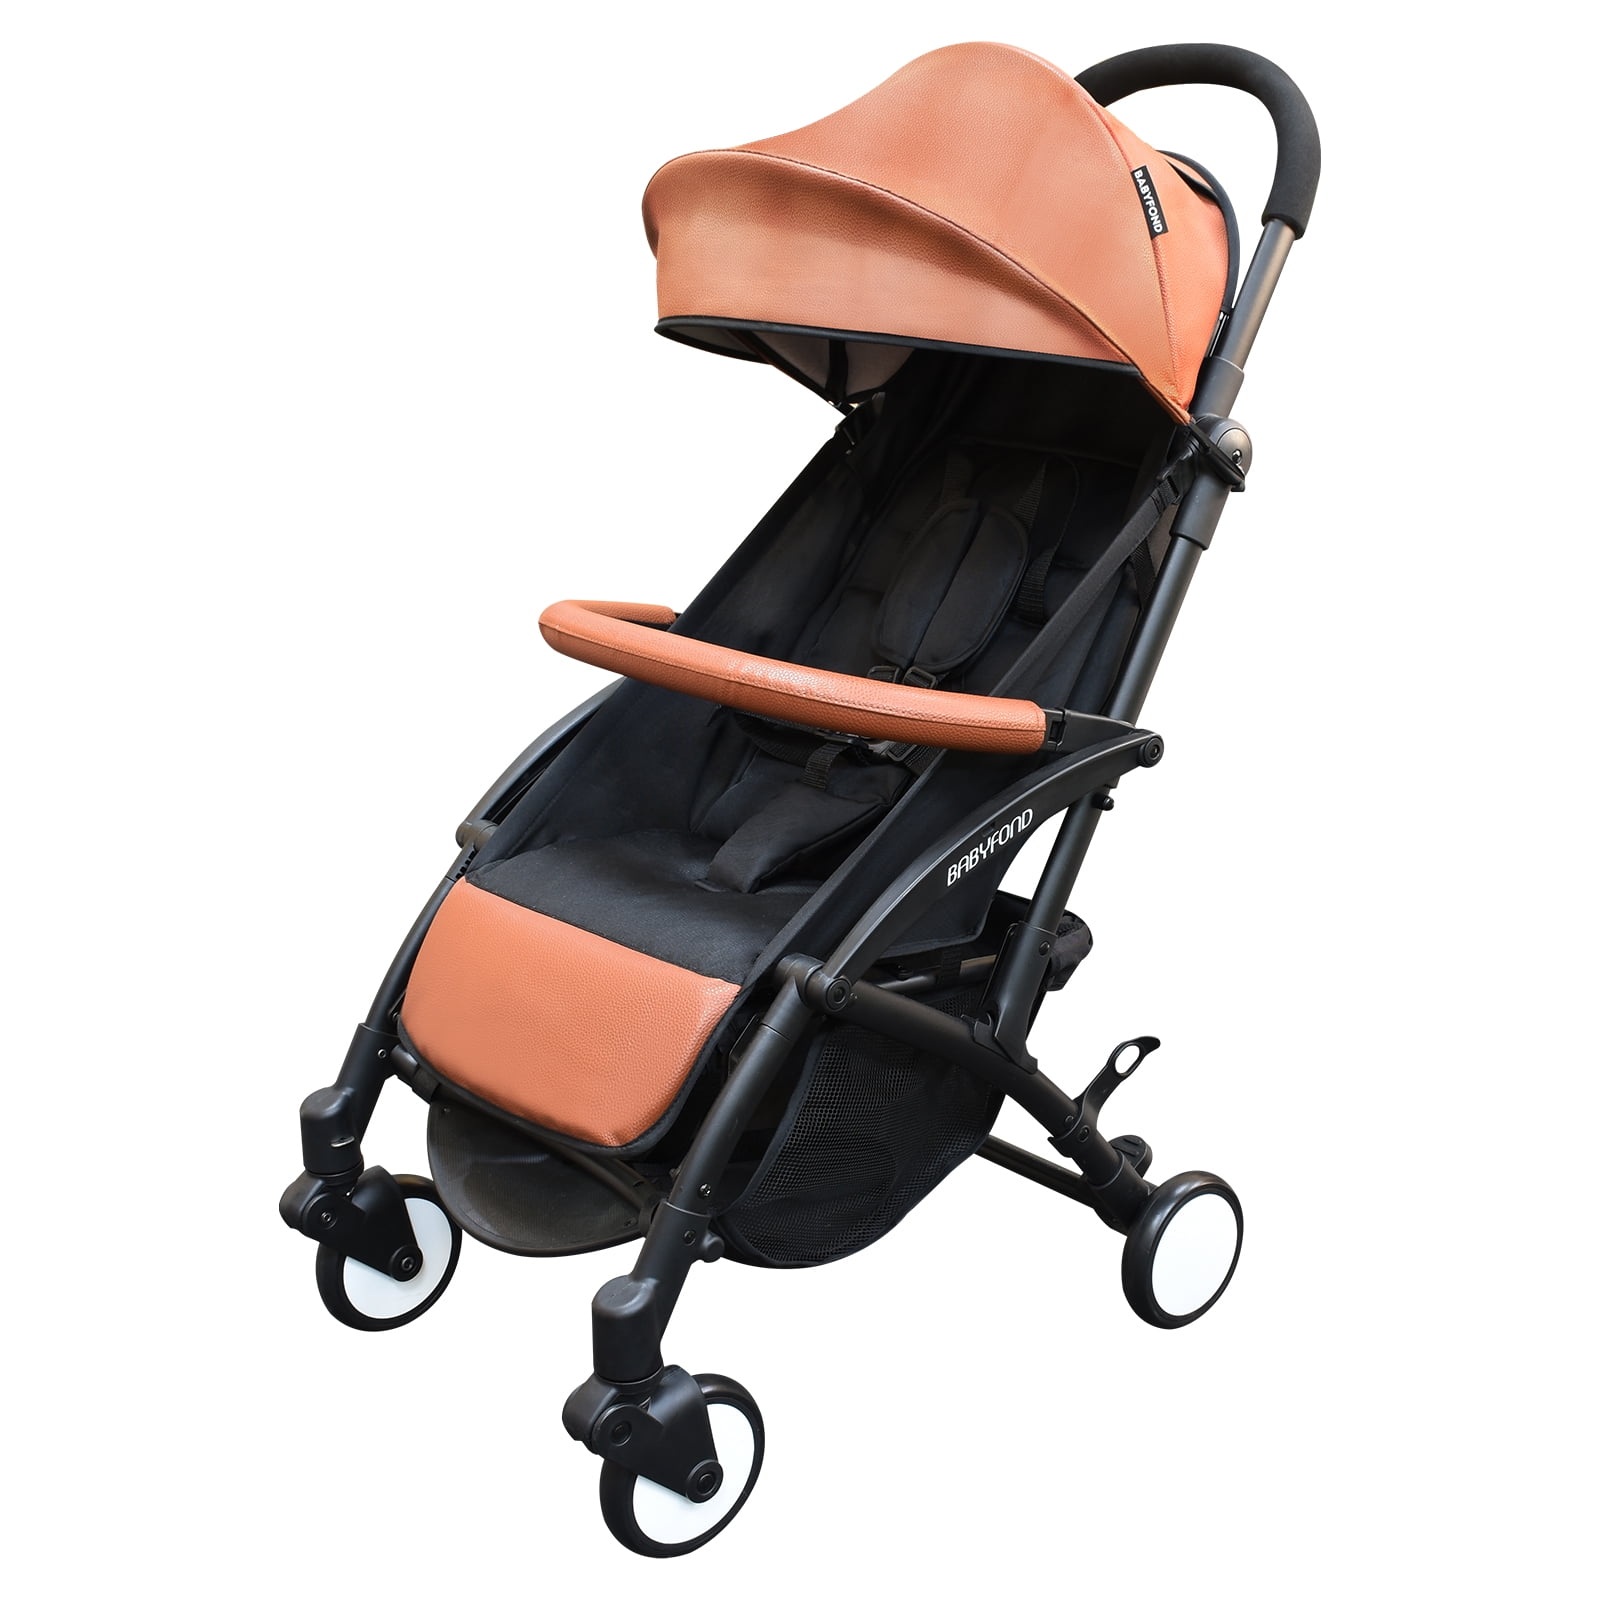 Babyfond Baby Stroller Travel System PU Leather Lightweight